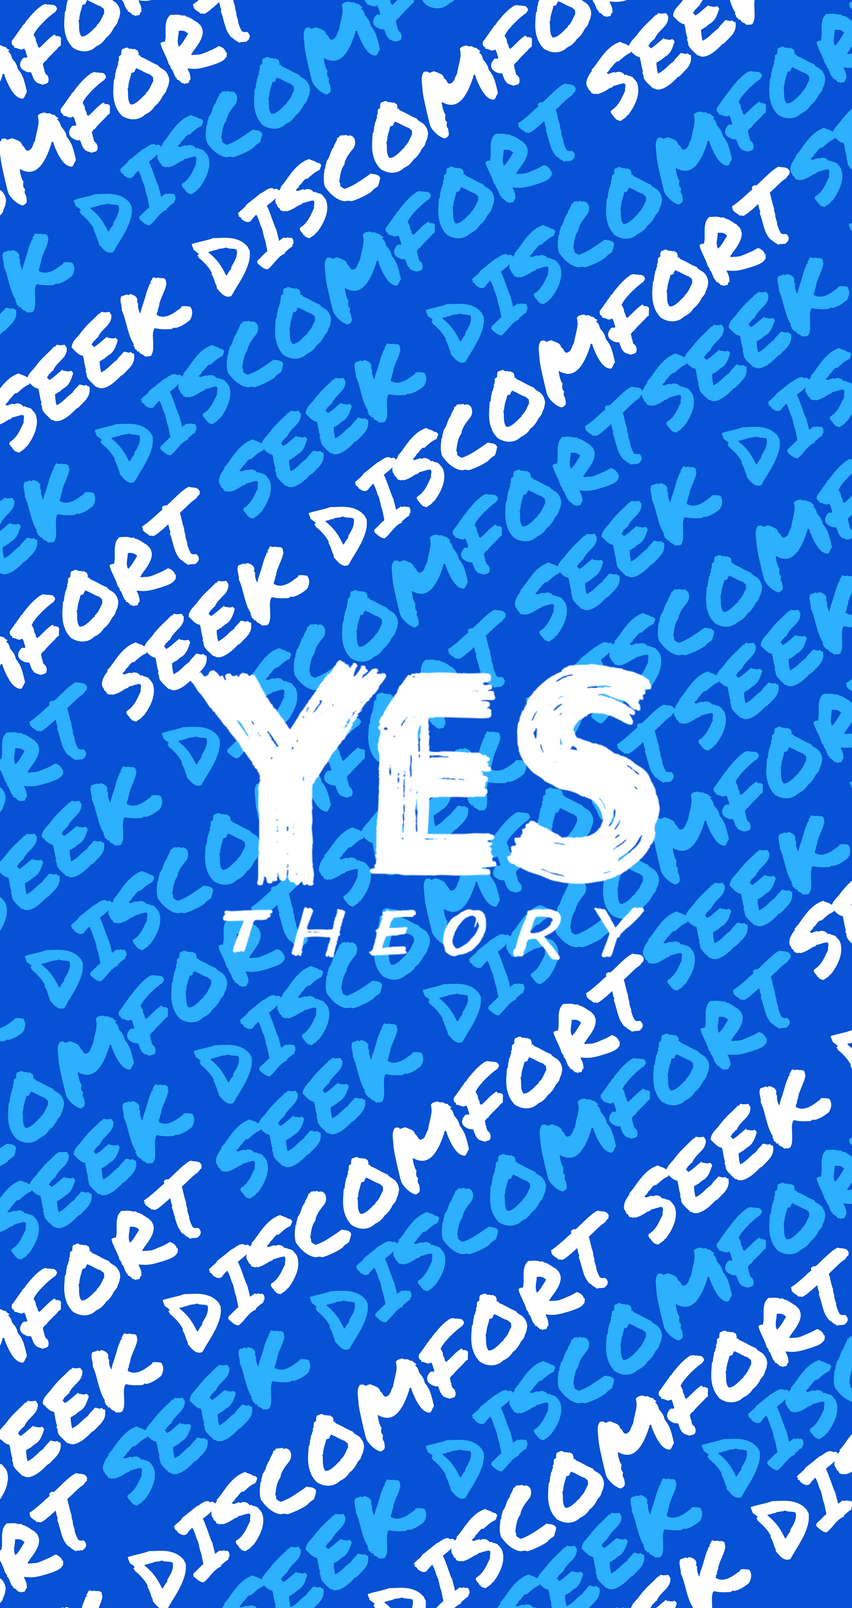 Yes Theory “Seek Discomfort” Phone Wallpaper. Theory quotes, Phone wallpaper, Wallpaper